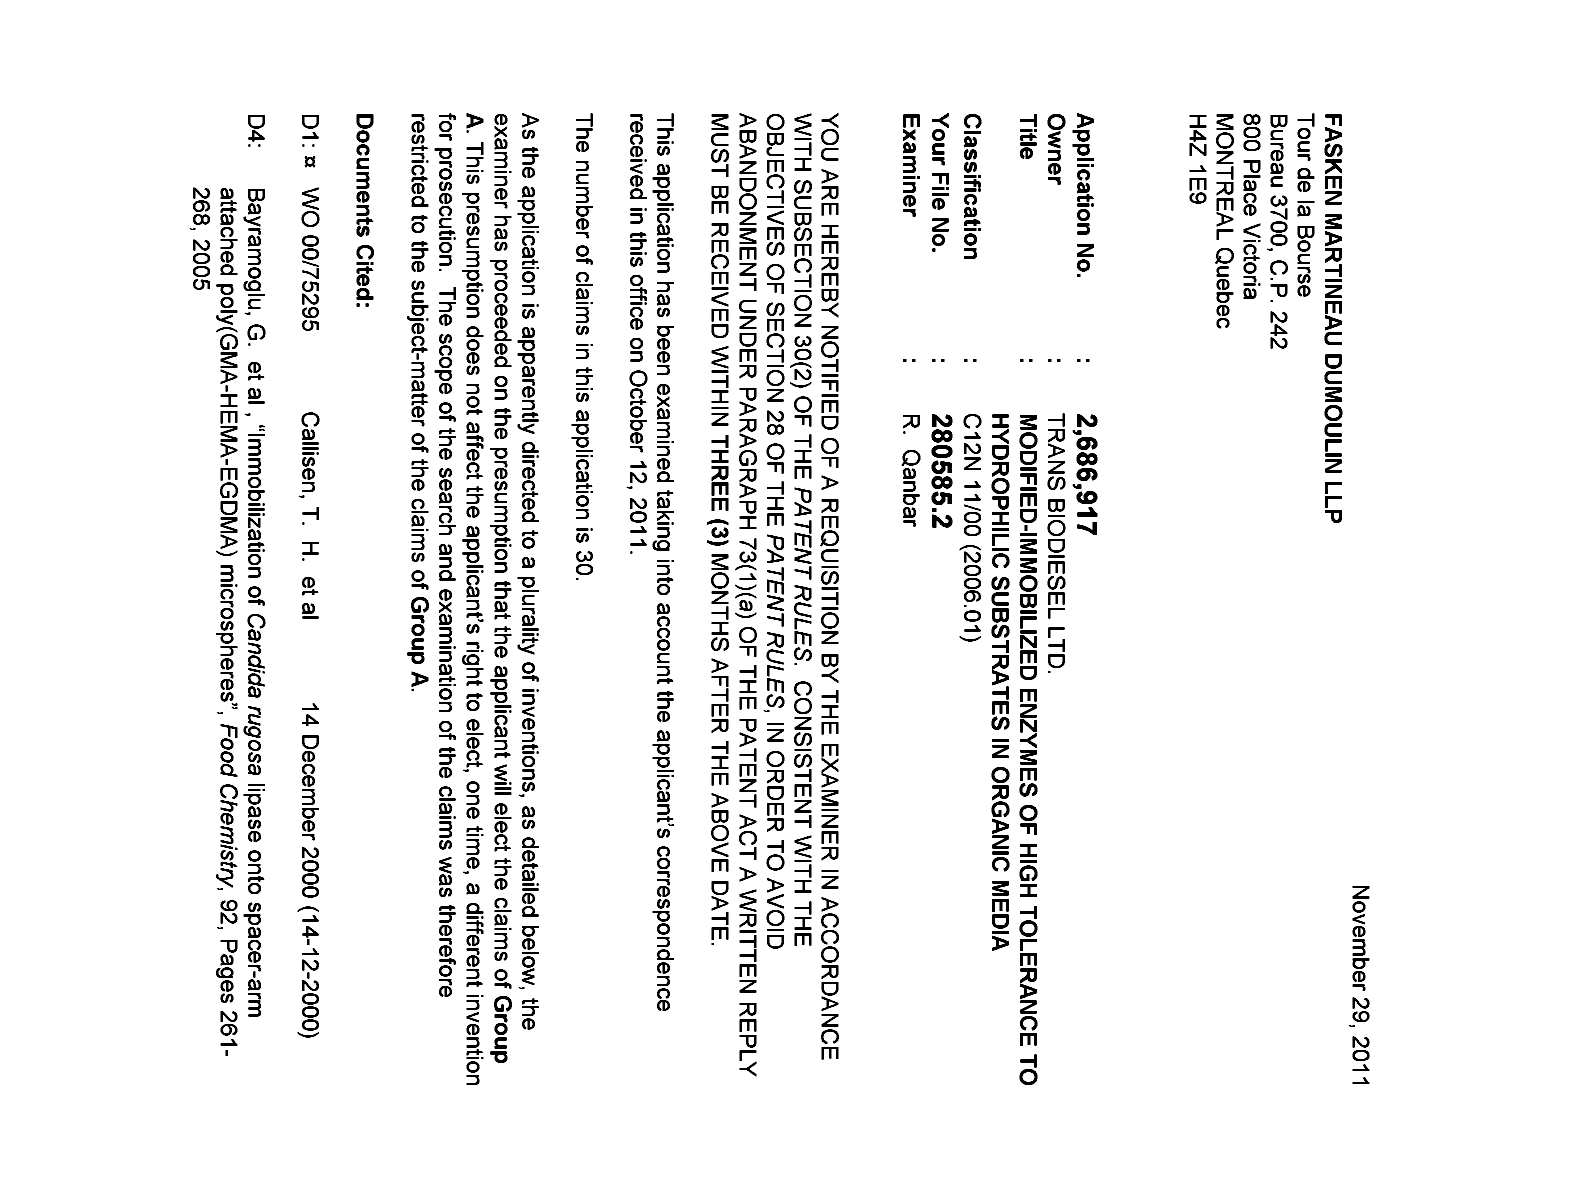 Canadian Patent Document 2686917. Prosecution-Amendment 20101229. Image 1 of 4